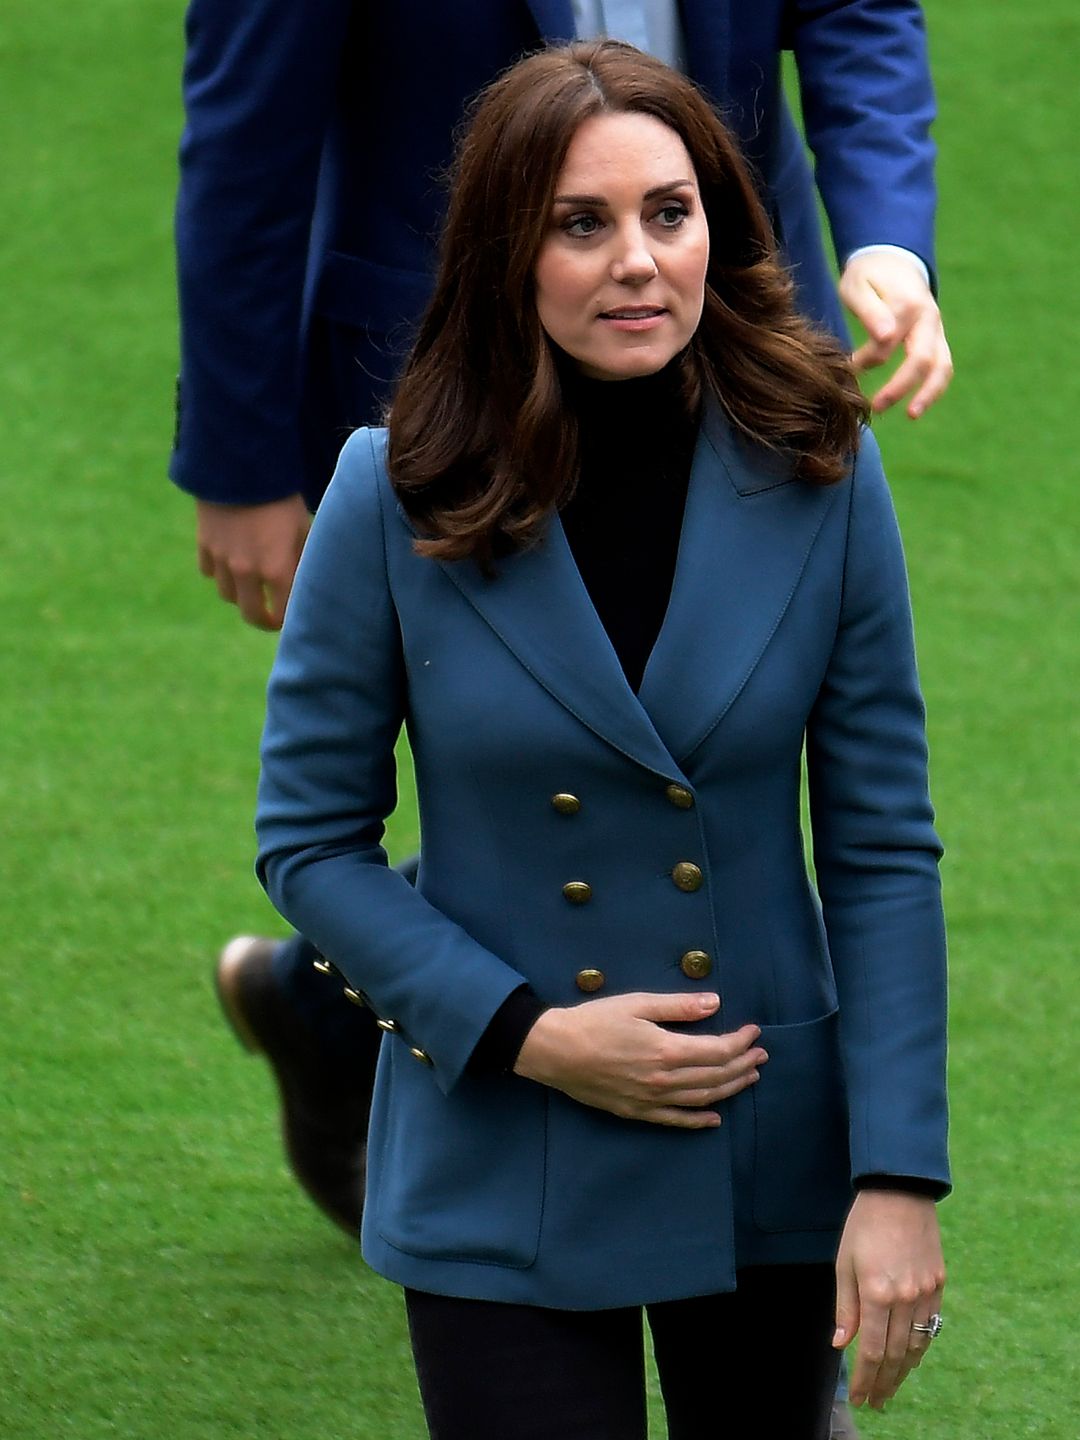 Princess Kate walking on the football field